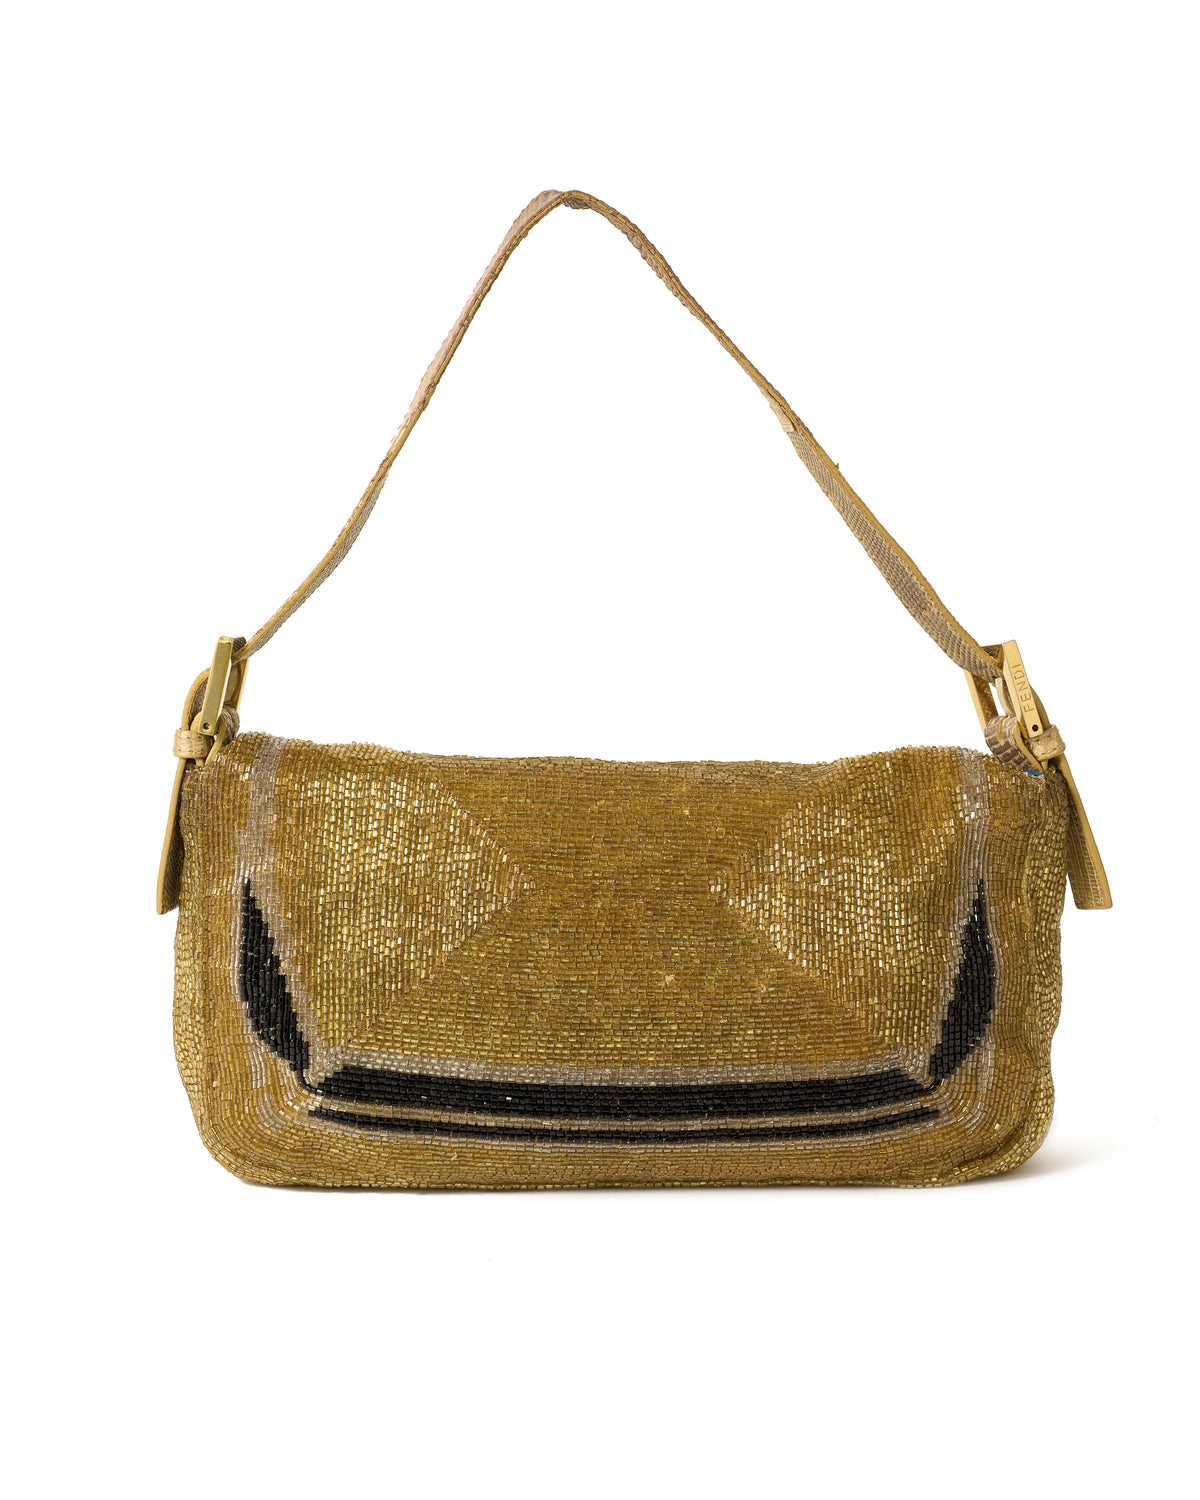 Pre-Owned Fendi Beaded Gold Baguette Bag